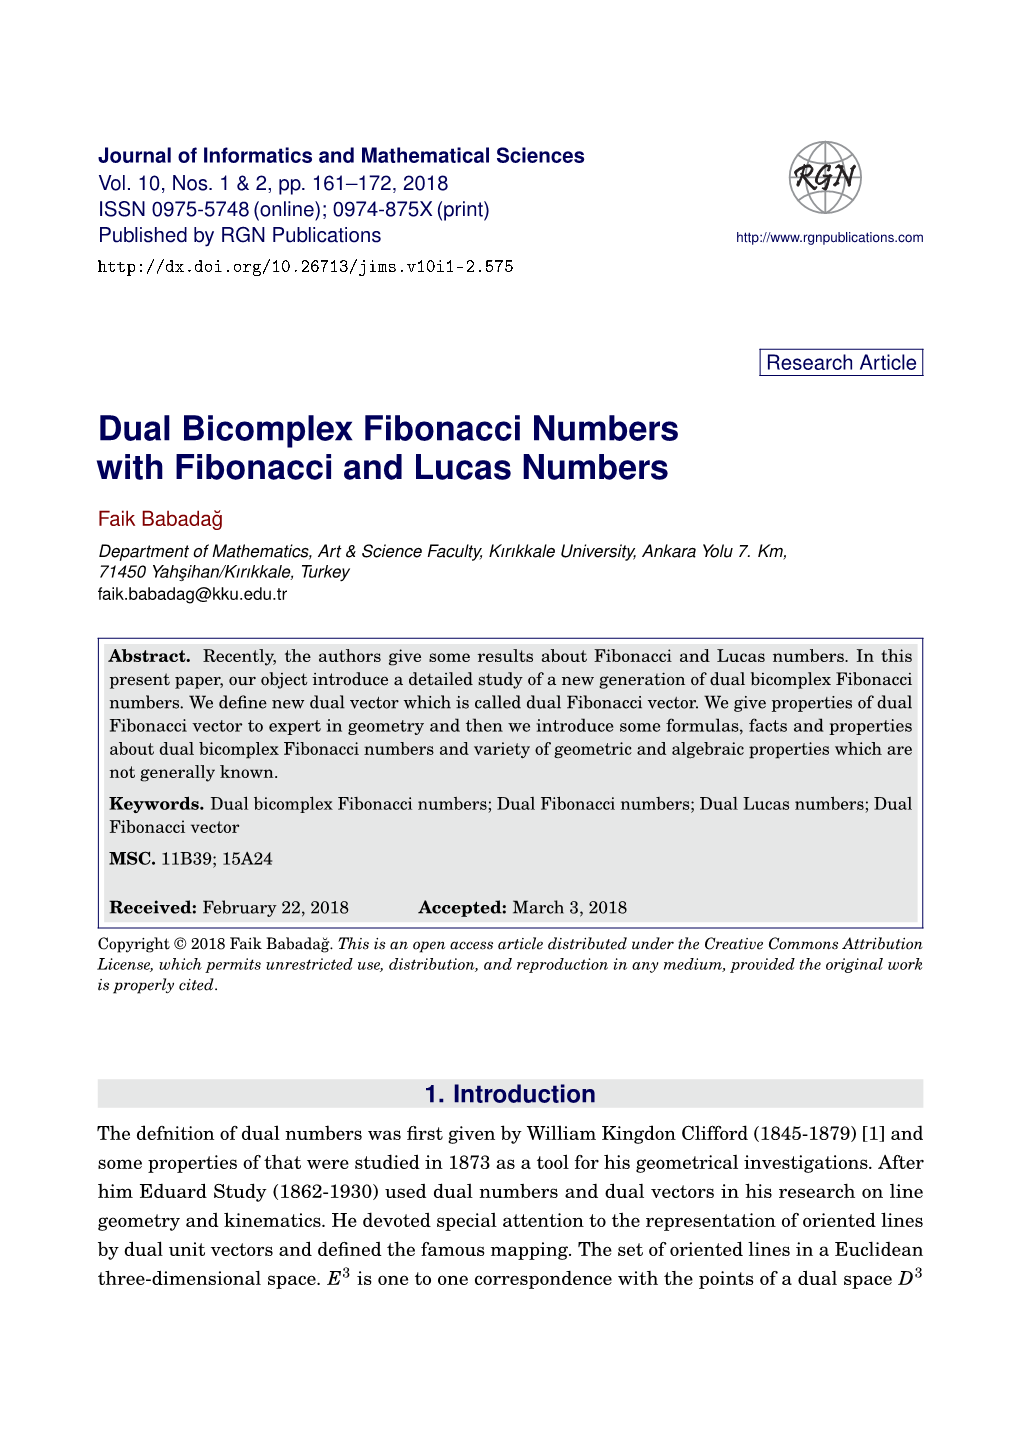 Dual Bicomplex Fibonacci Numbers with Fibonacci and Lucas Numbers